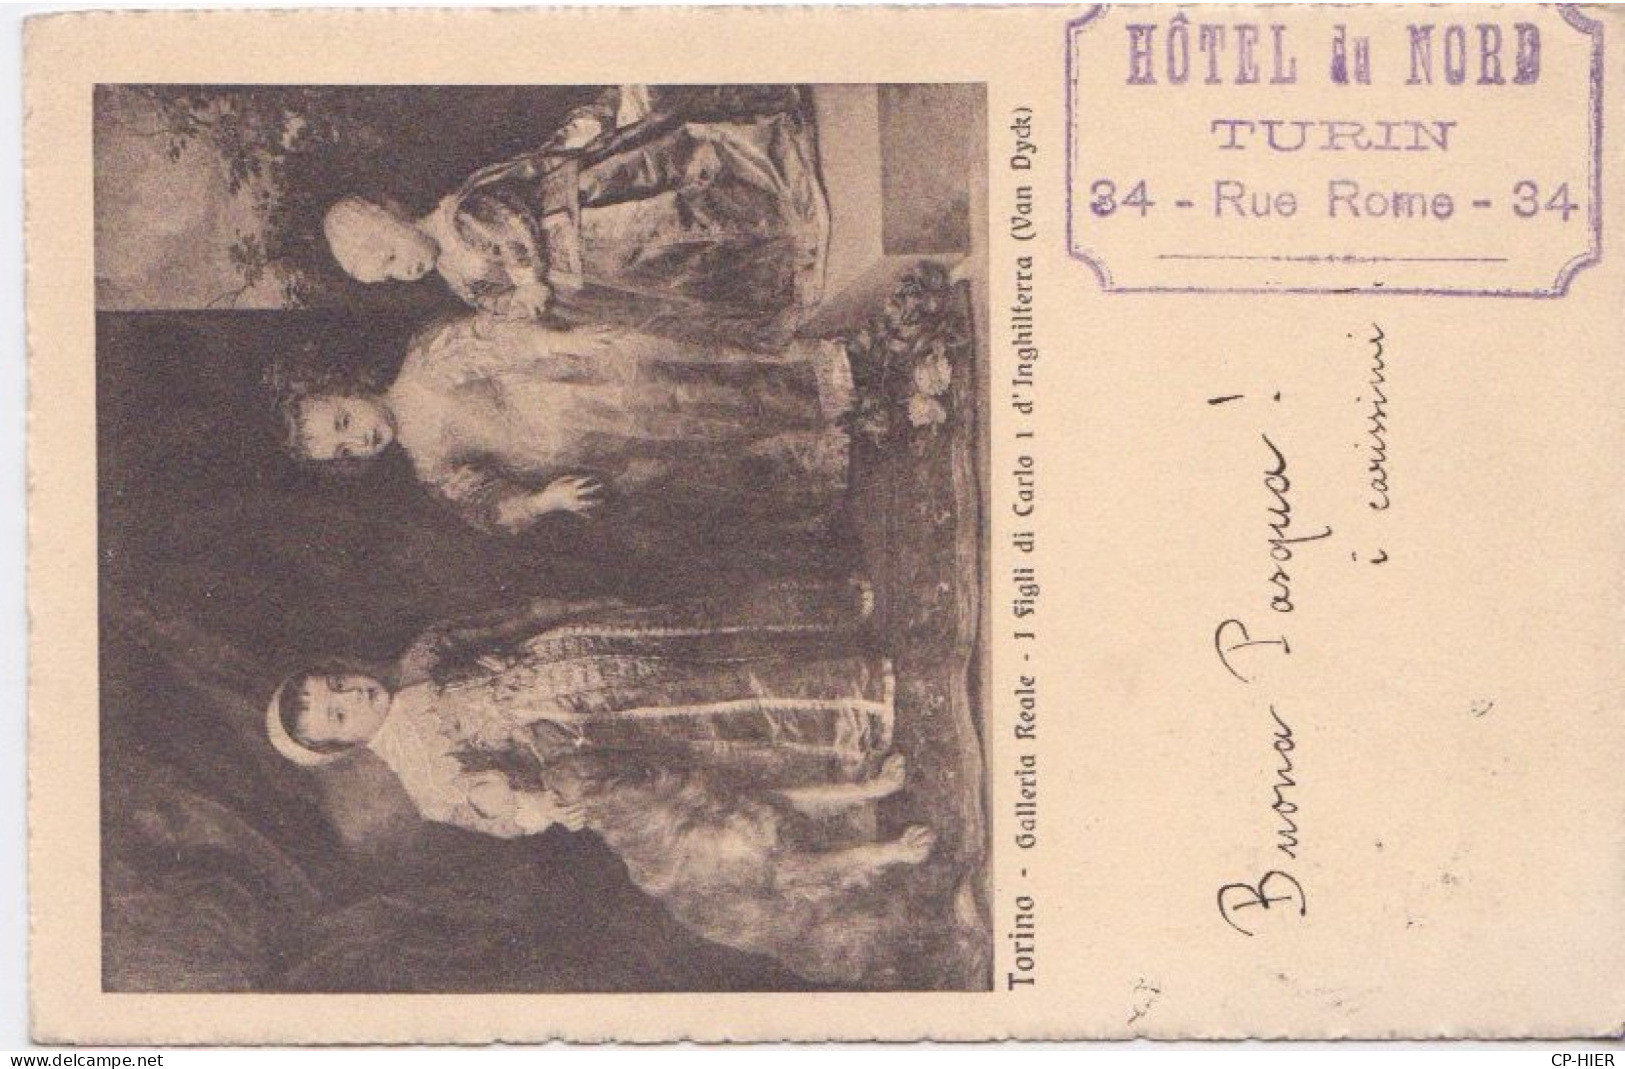 1908 - ITALIE - ITALIA - SICILIA - TORINO - CACHET HOTEL DU NORD DE TURIN  34 RUE DE ROME - Cafés, Hôtels & Restaurants